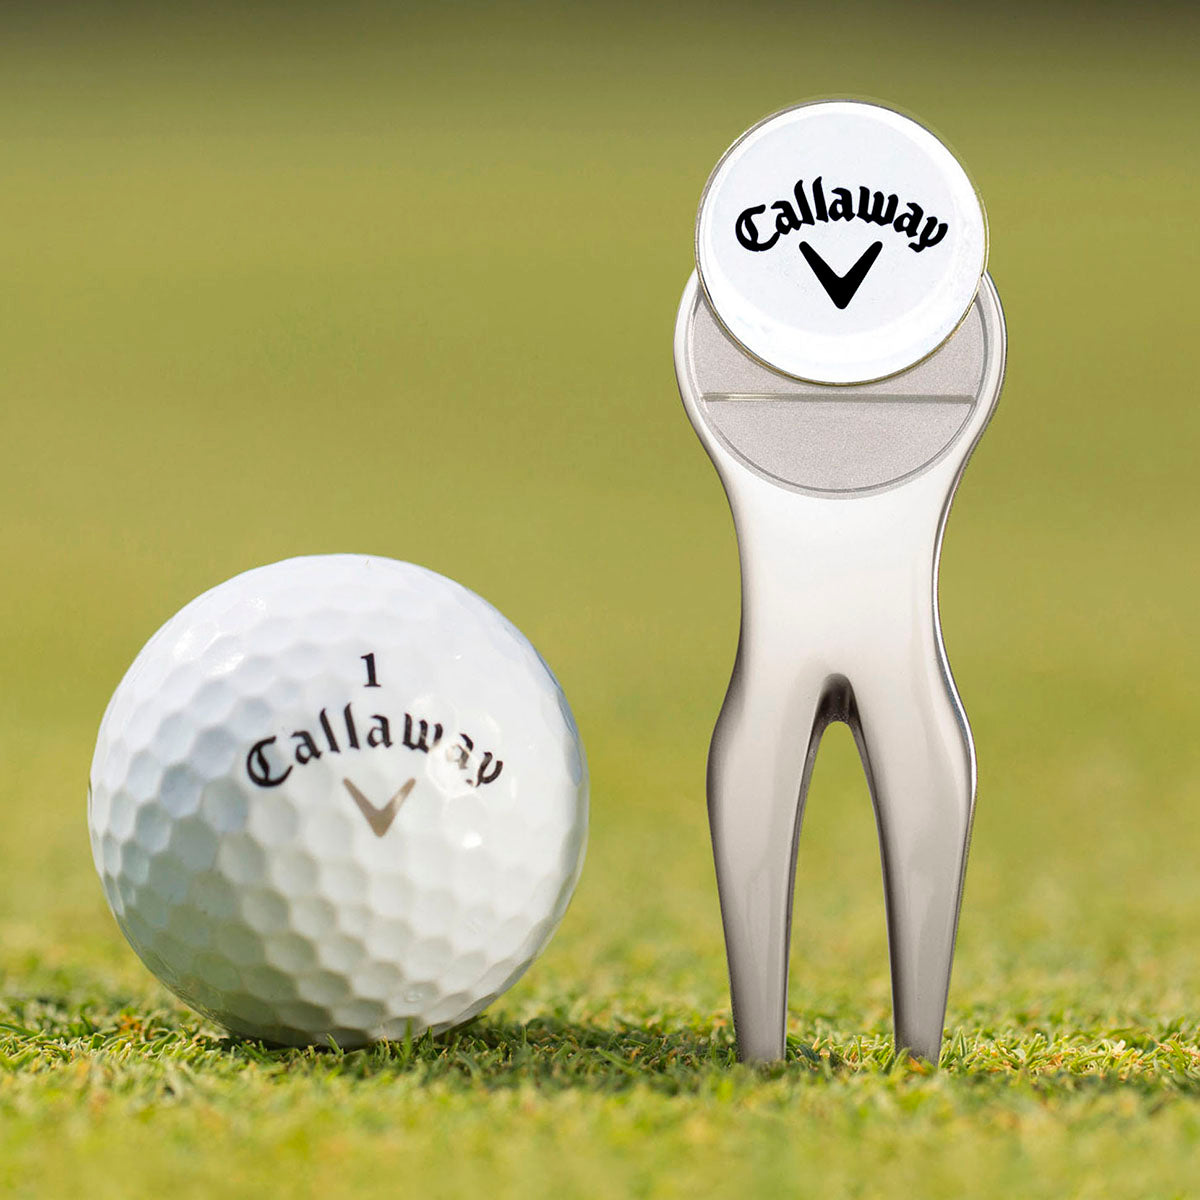 Callaway Divot Repair Tool and Golf Ball Marker - Silver Callaway